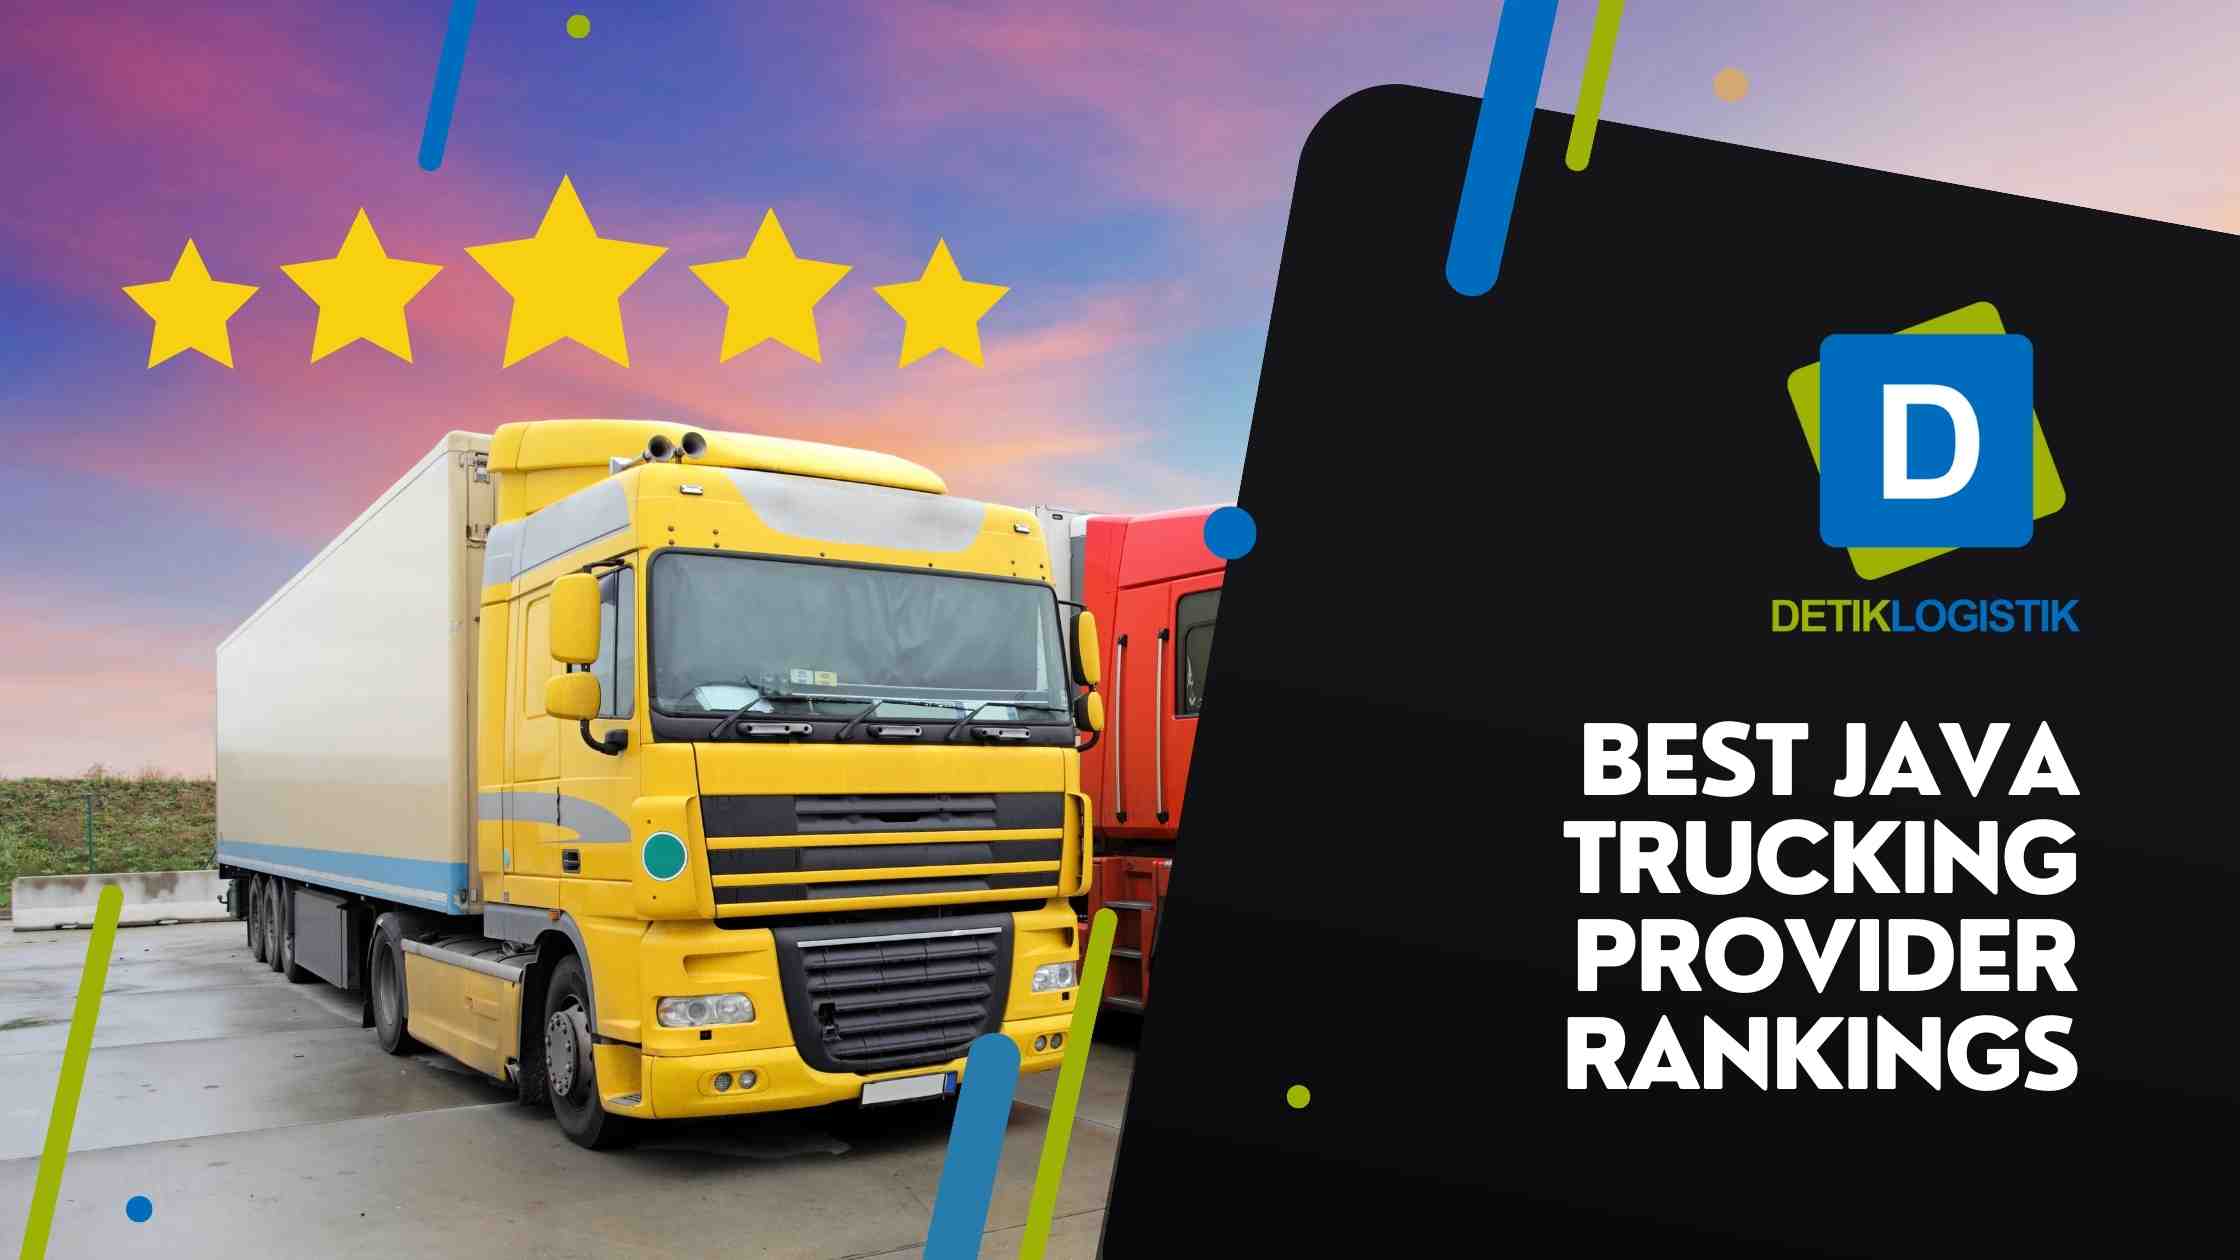 Best Java Trucking Provider Rankings - Detik Logistik